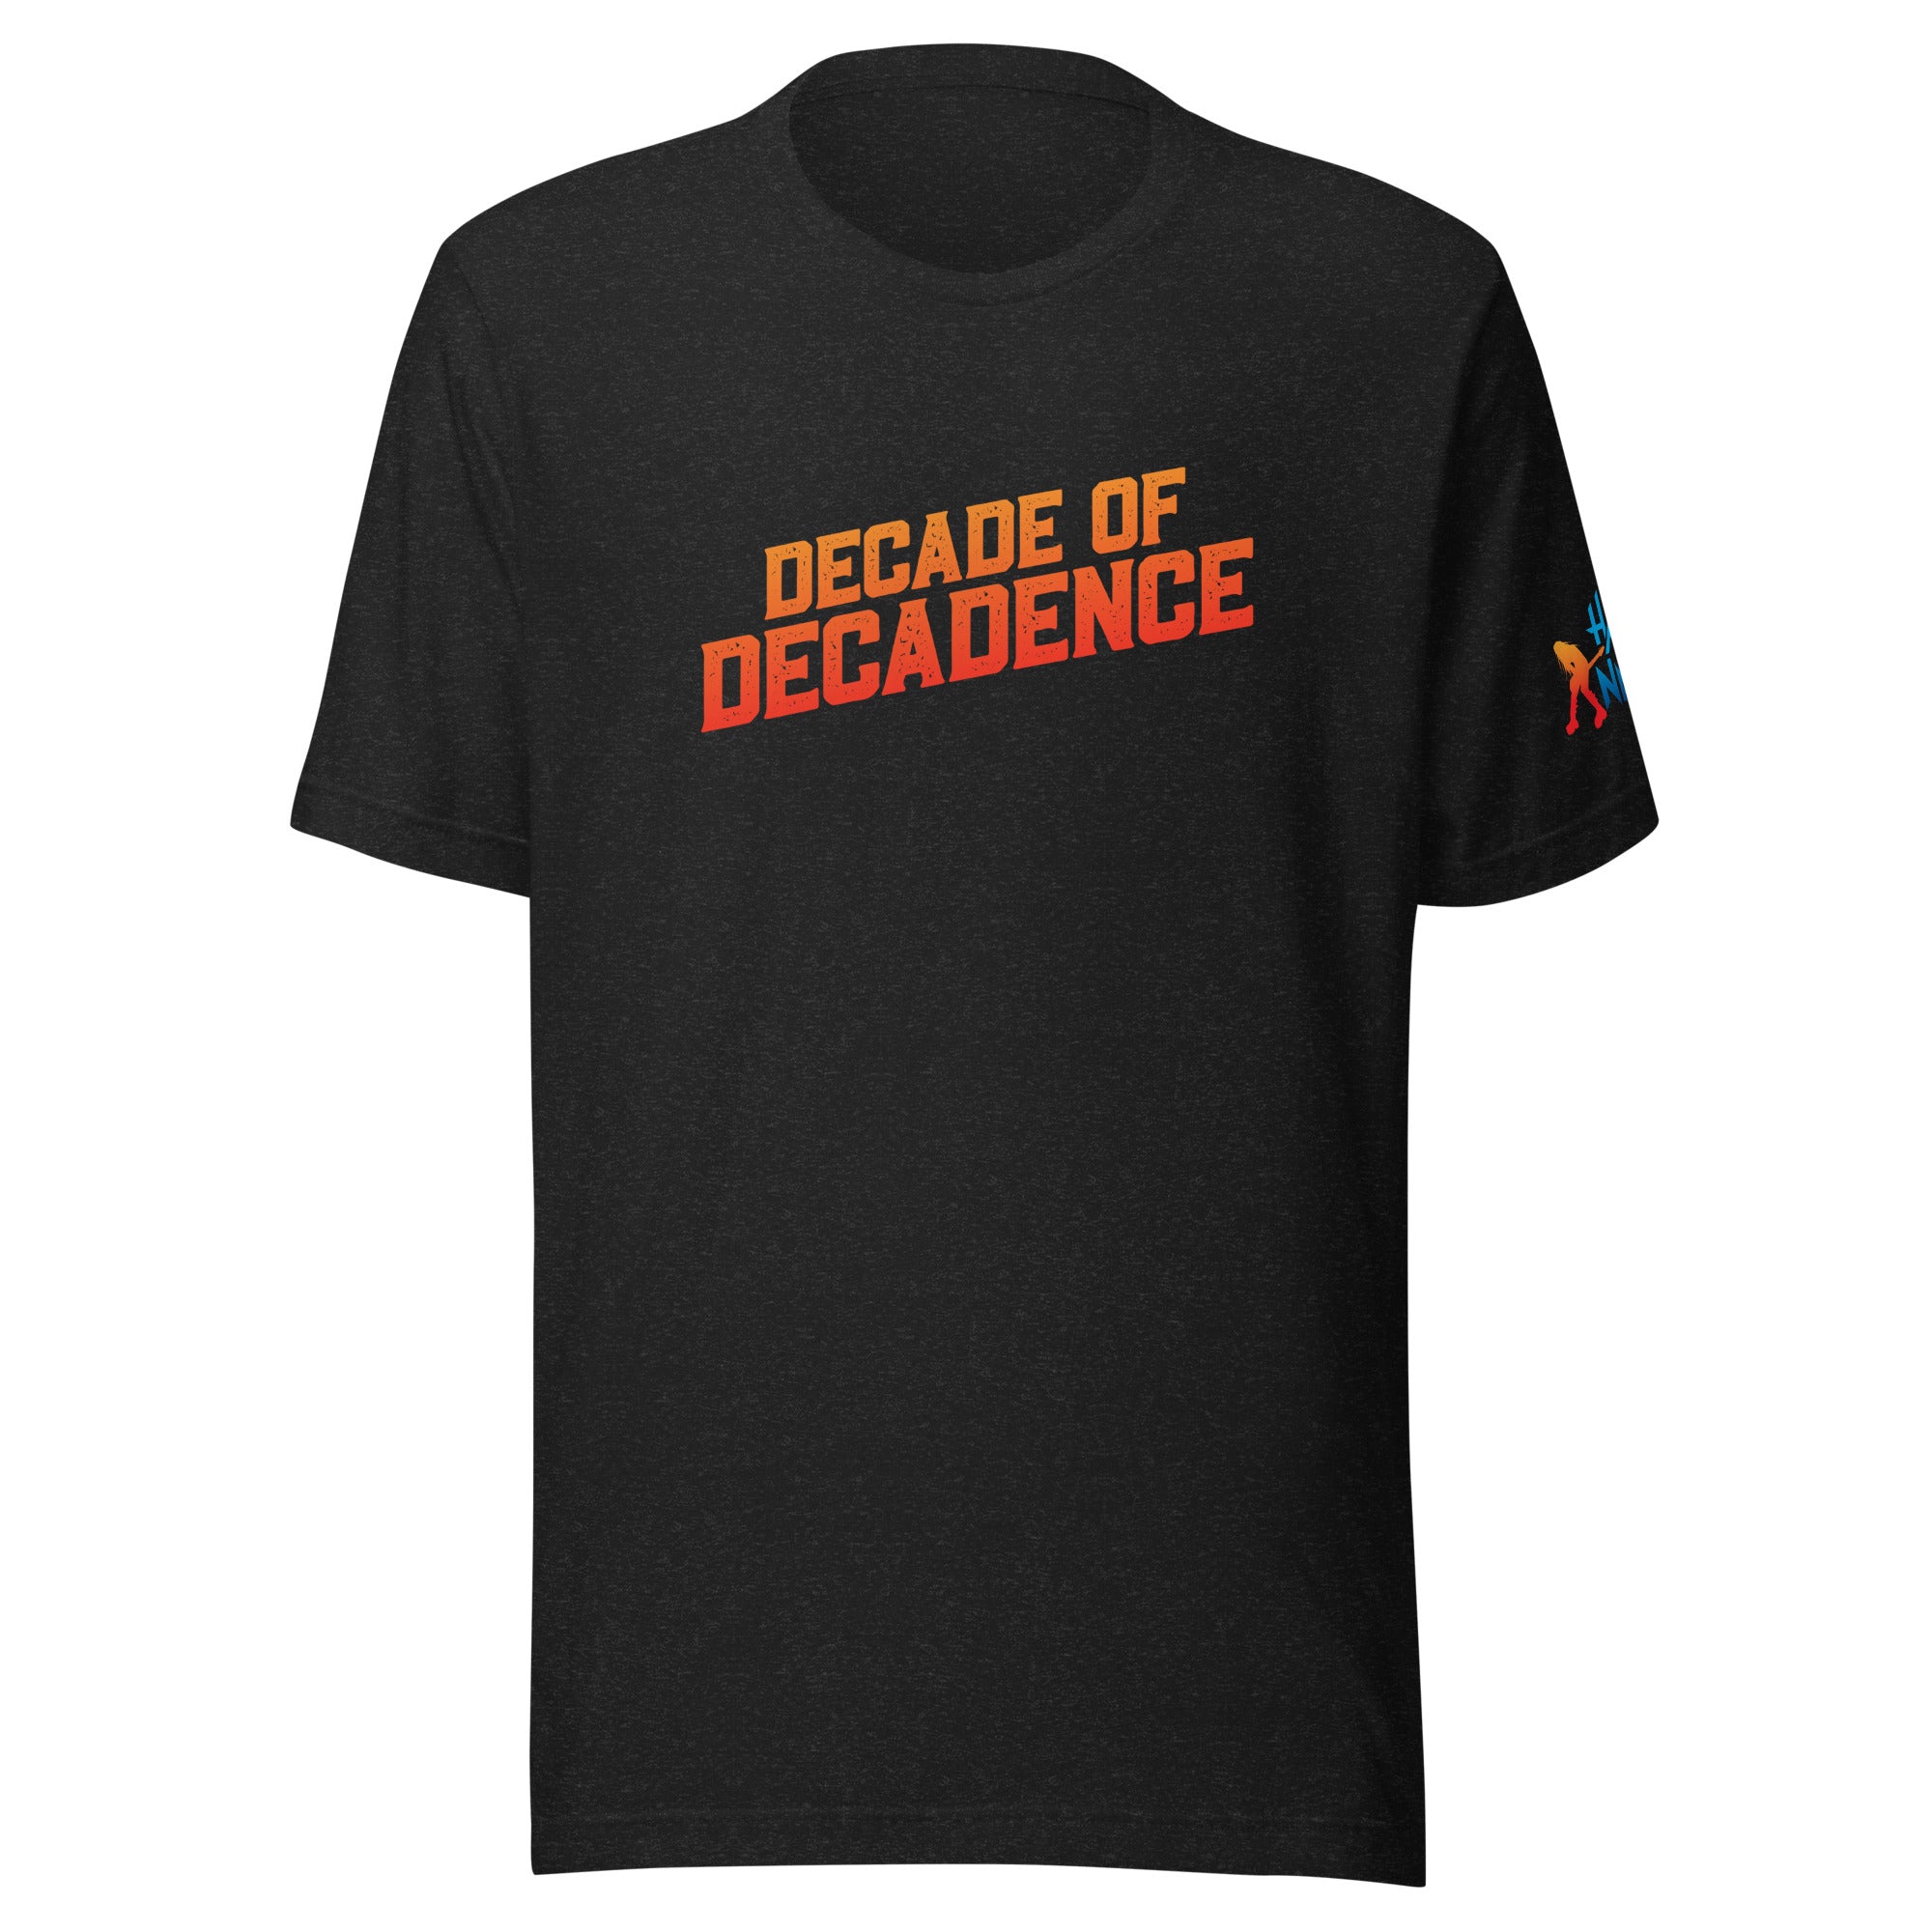 Hair Nation: Orange Decade of Decadence T-shirt